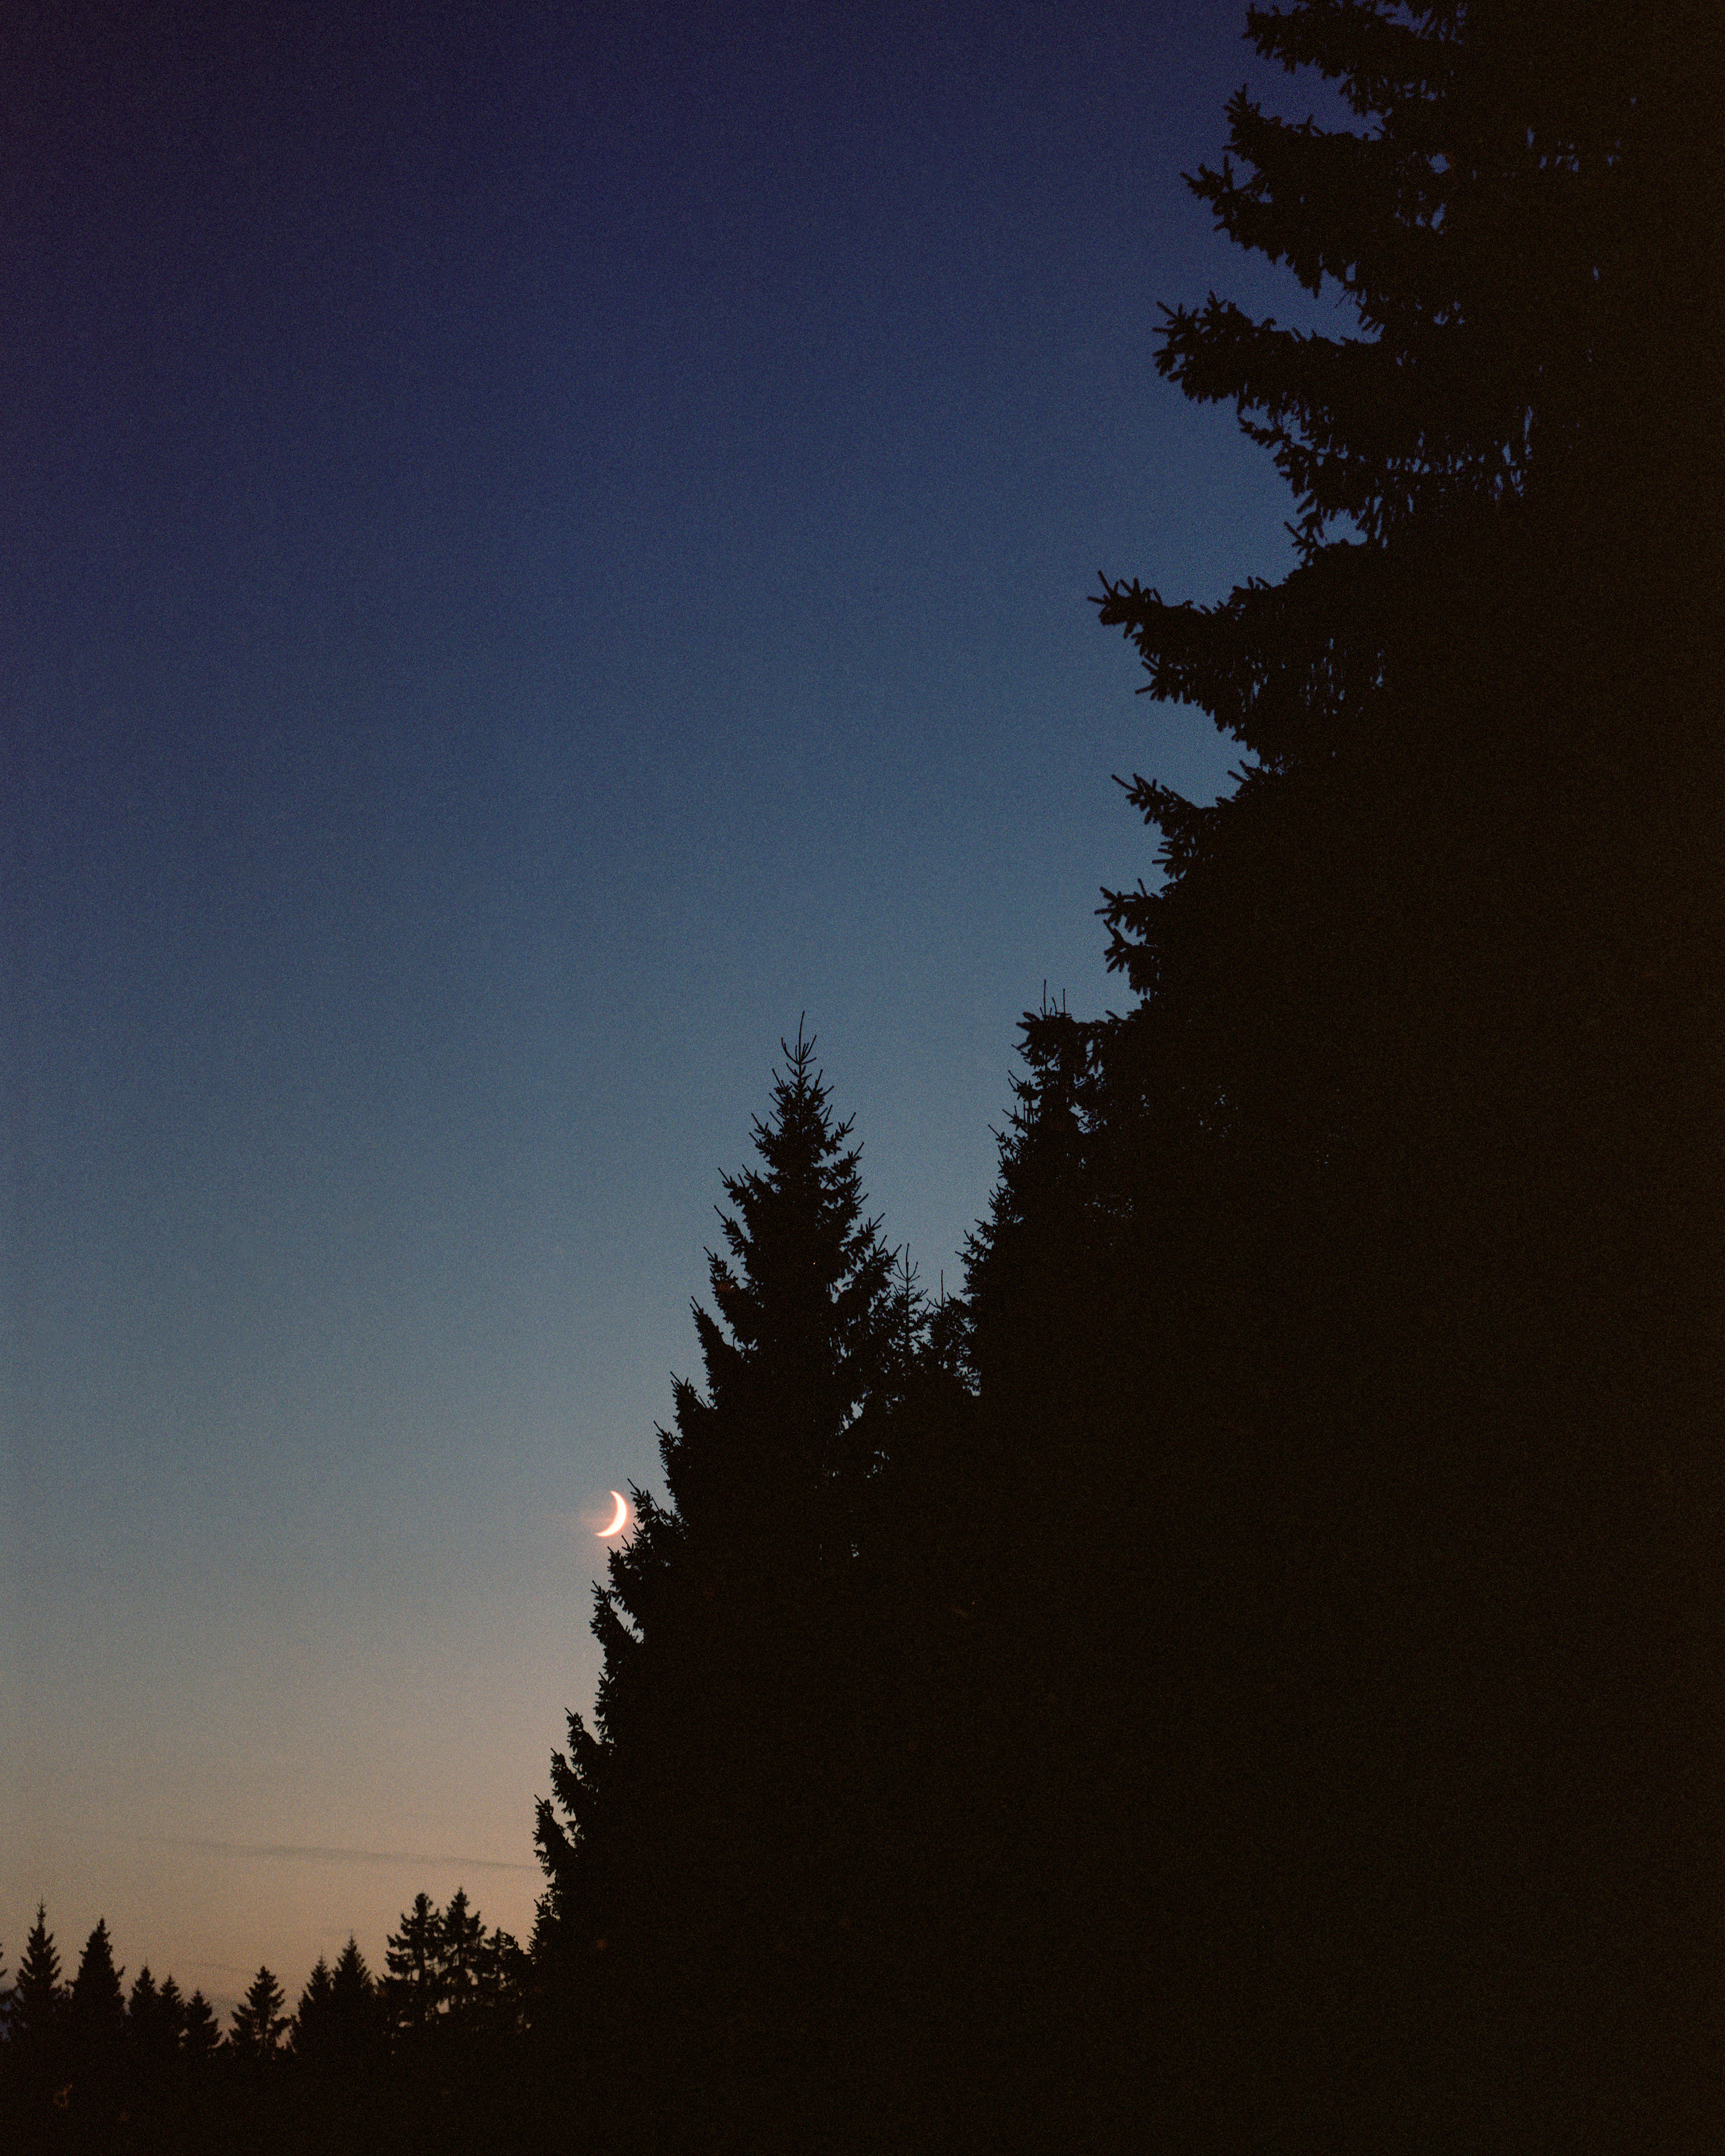 A serene crescent moon illuminates the night sky above a dense forest of tall dark trees.